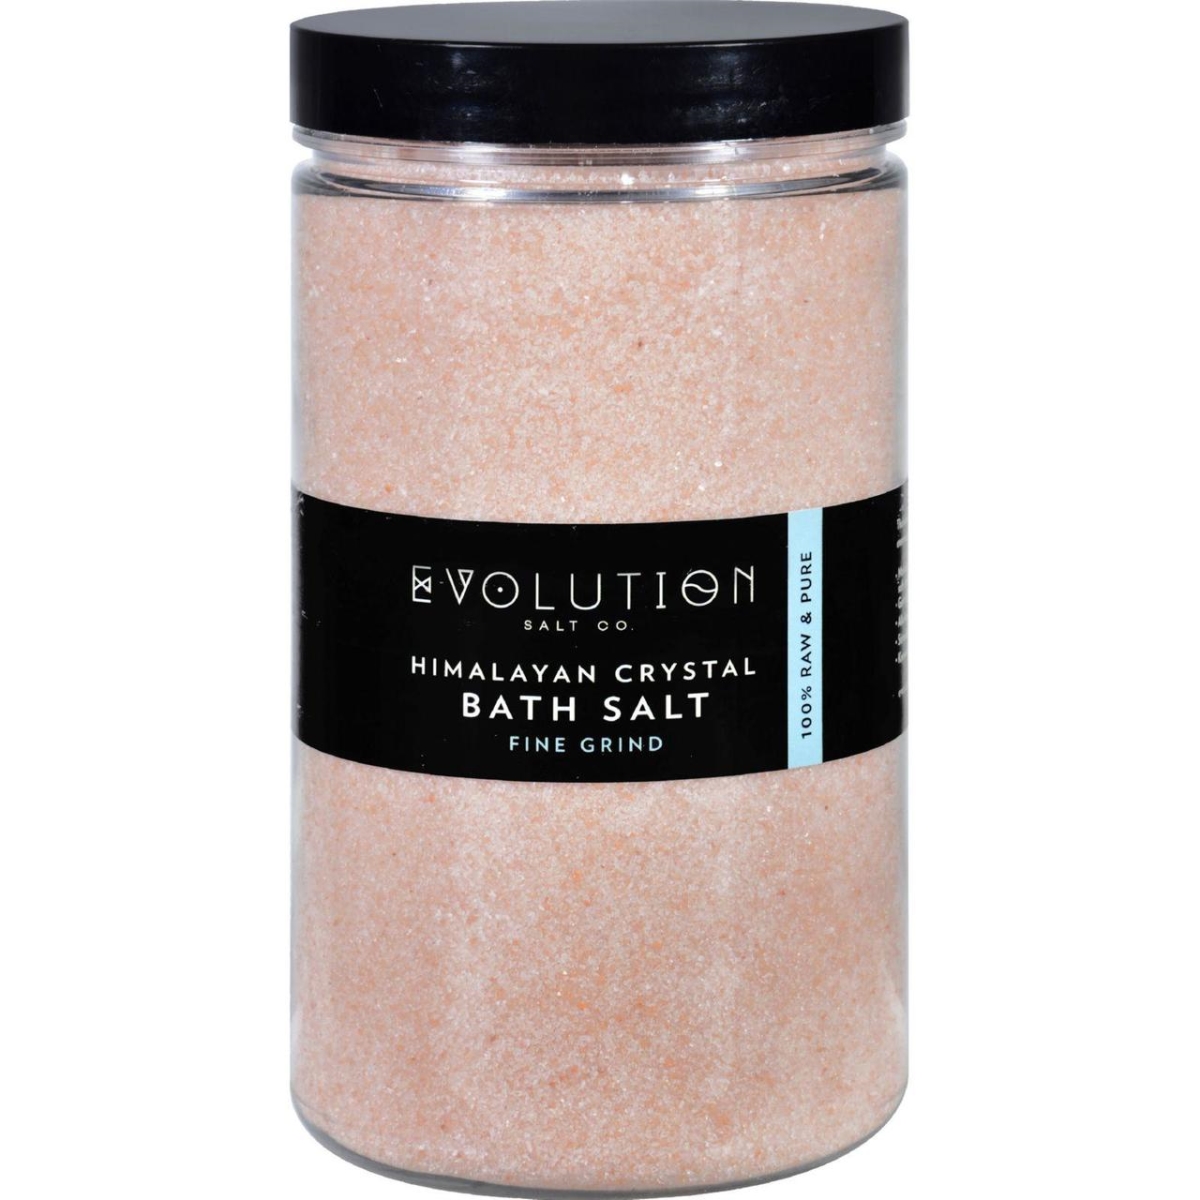 Hg1702133 26 Oz Himalayan Bath Salt, Fine